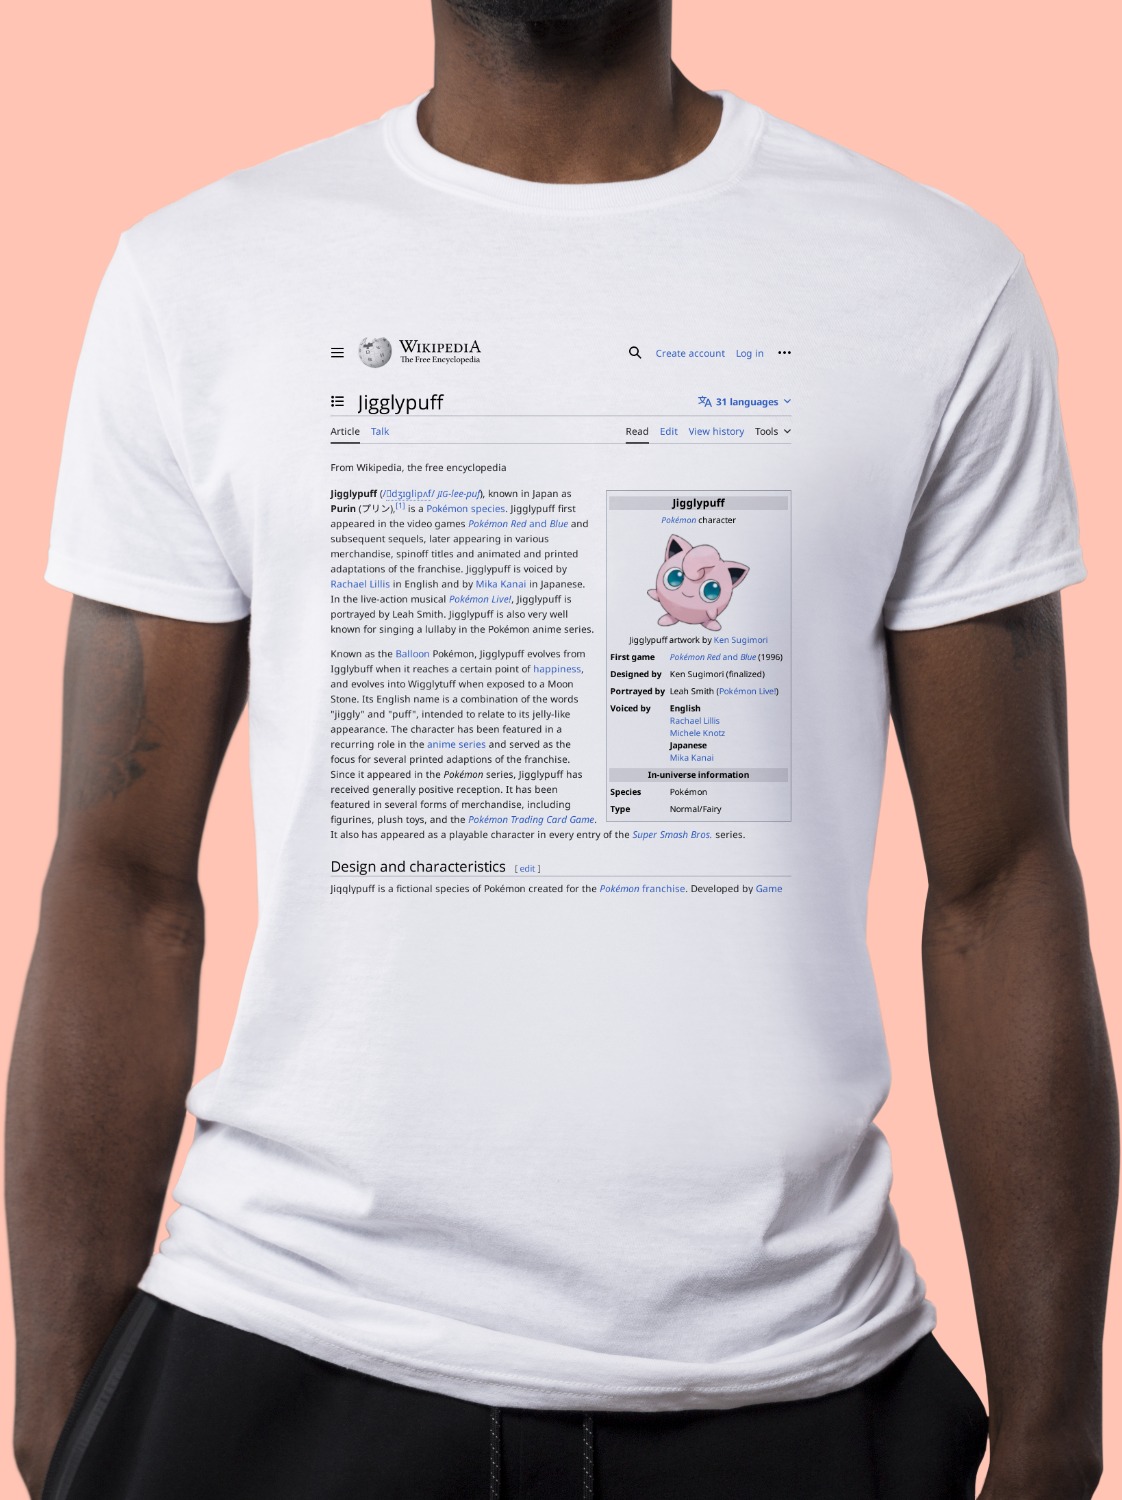 Jigglypuff Wikipedia Shirt